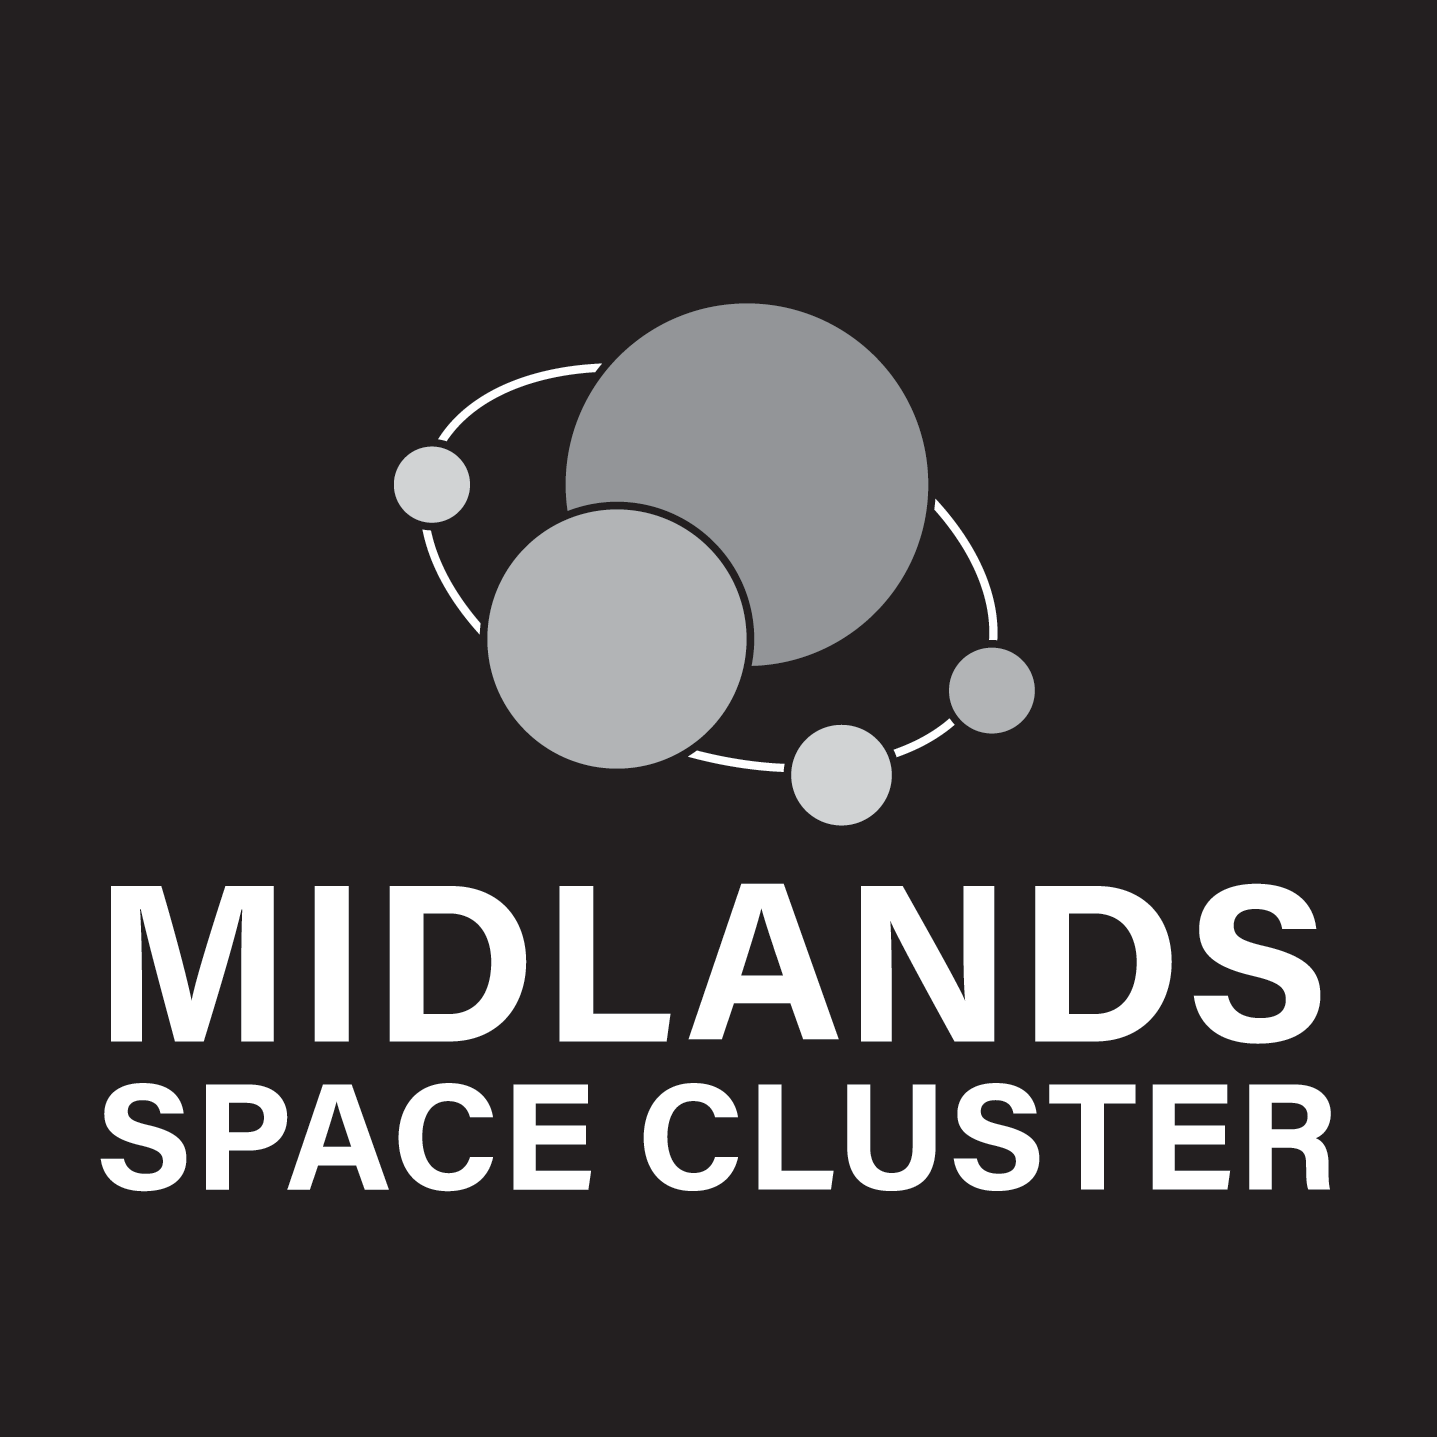 Midlands-Square-Cluster-Square-Logo-DARK-BACKGROUND-002